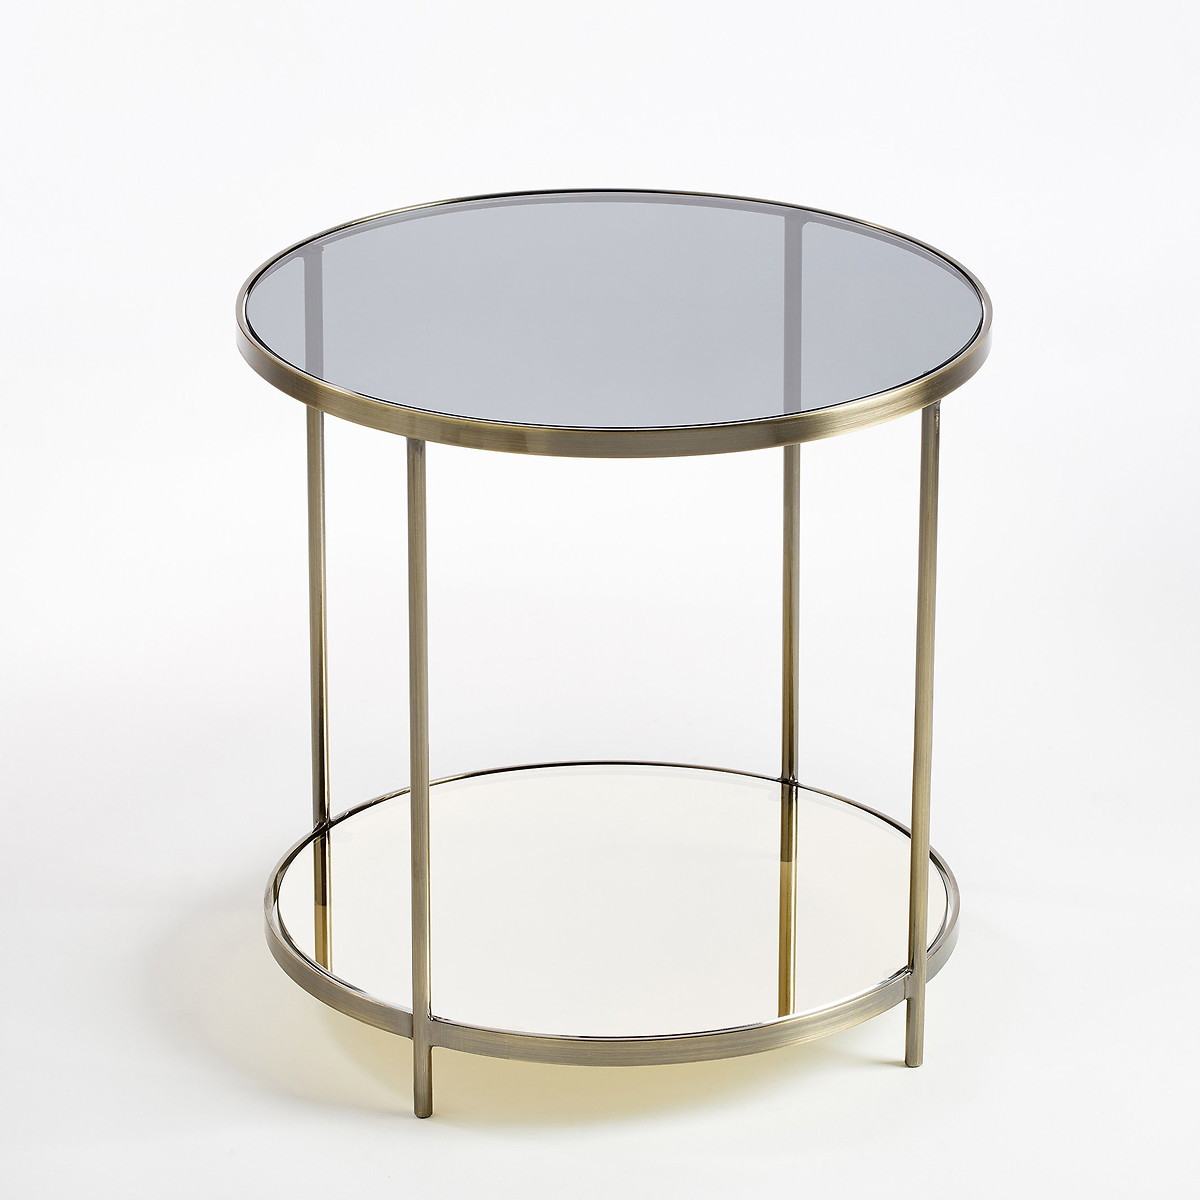 ulupna two-tier side table in brass & glass